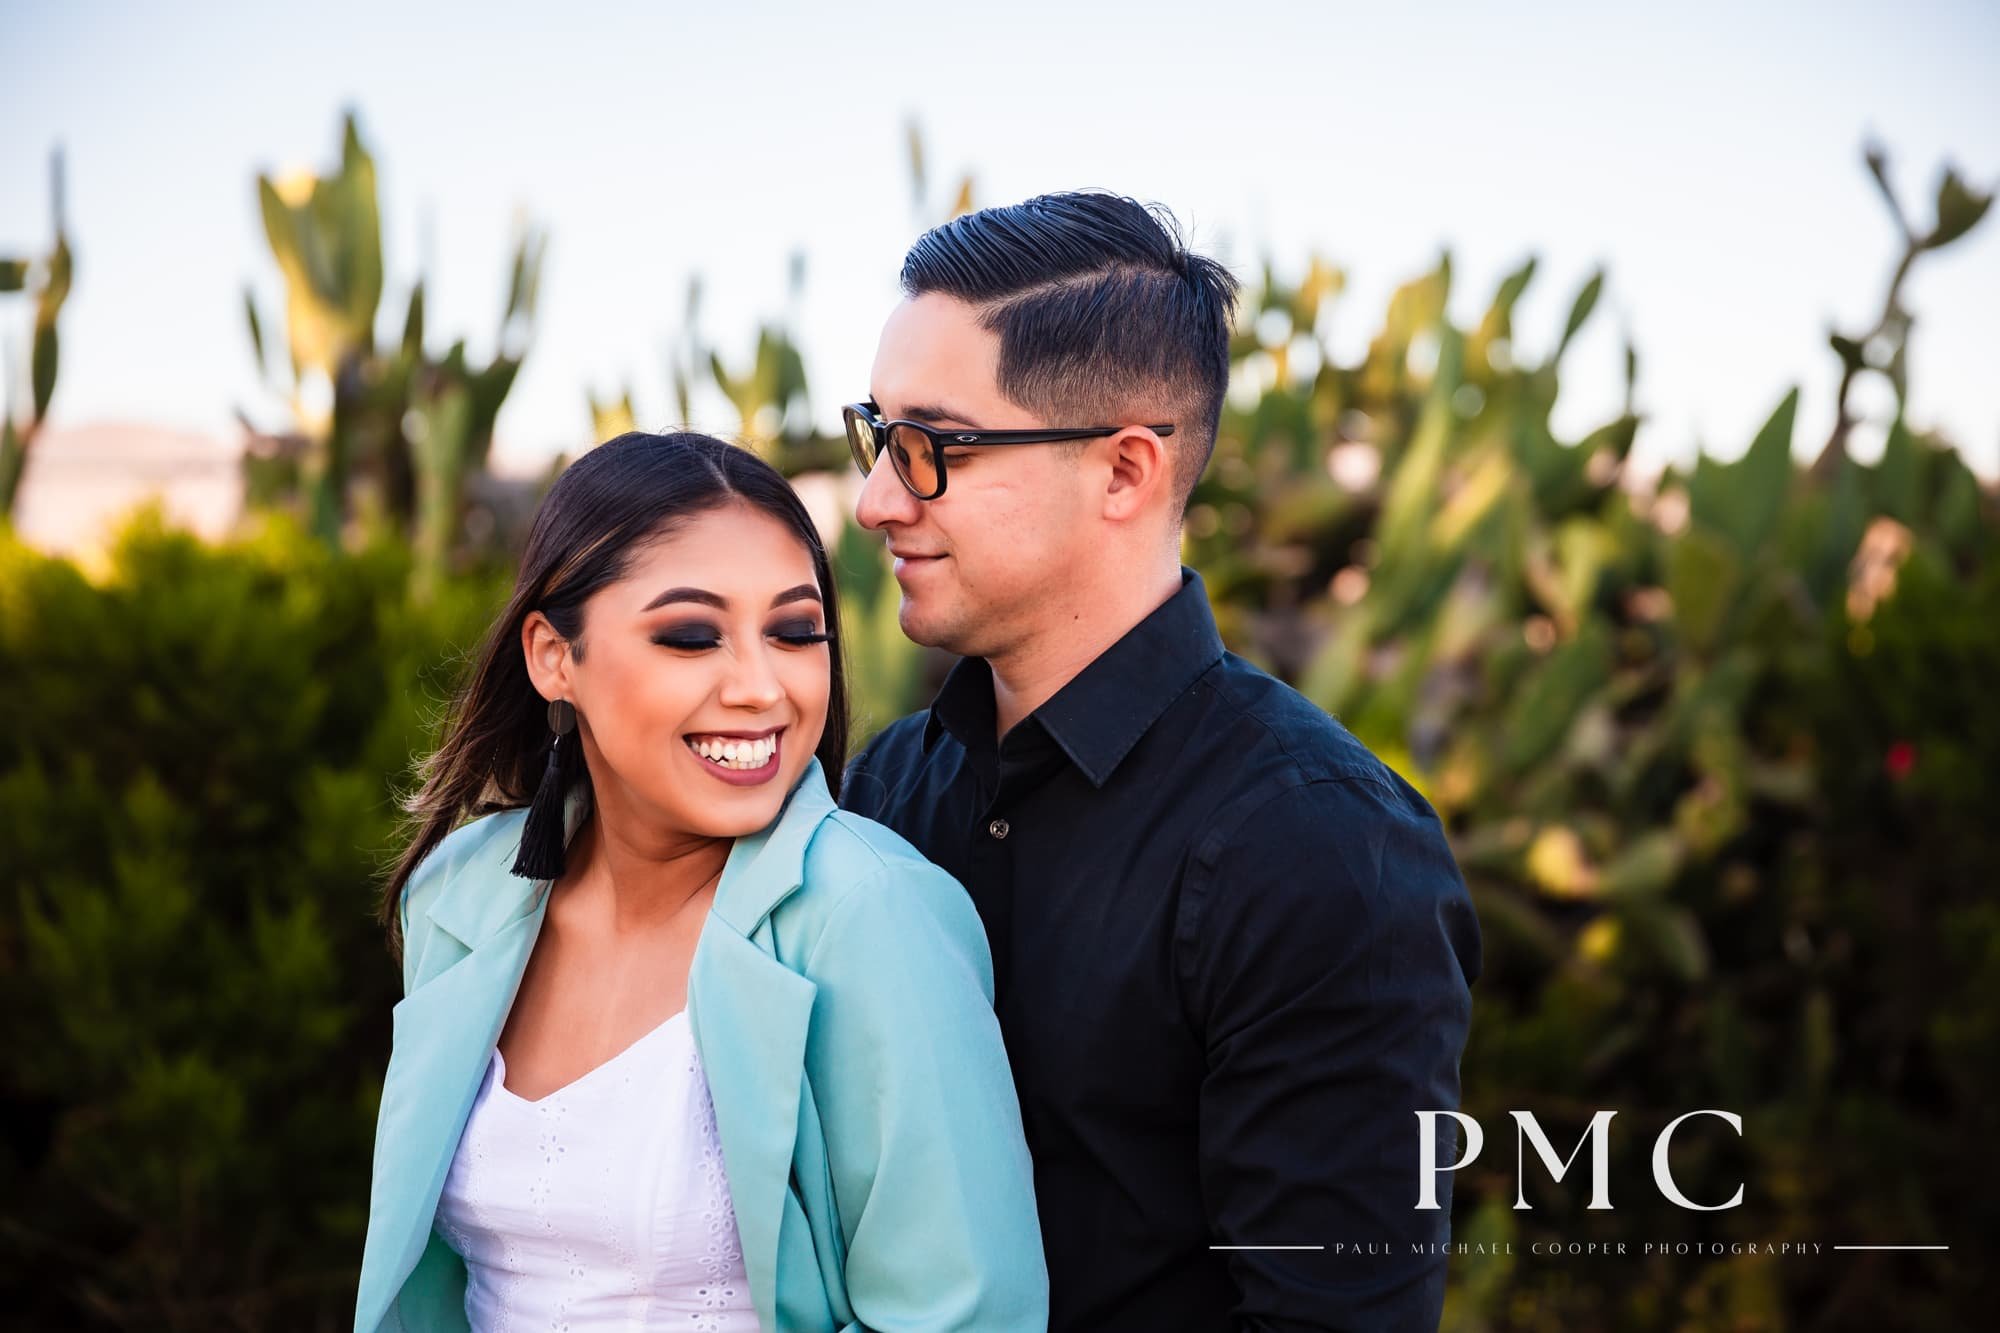 Camp Pendleton Couples Engagement Portraits - Best San Diego Wedding Photographer-7.jpg